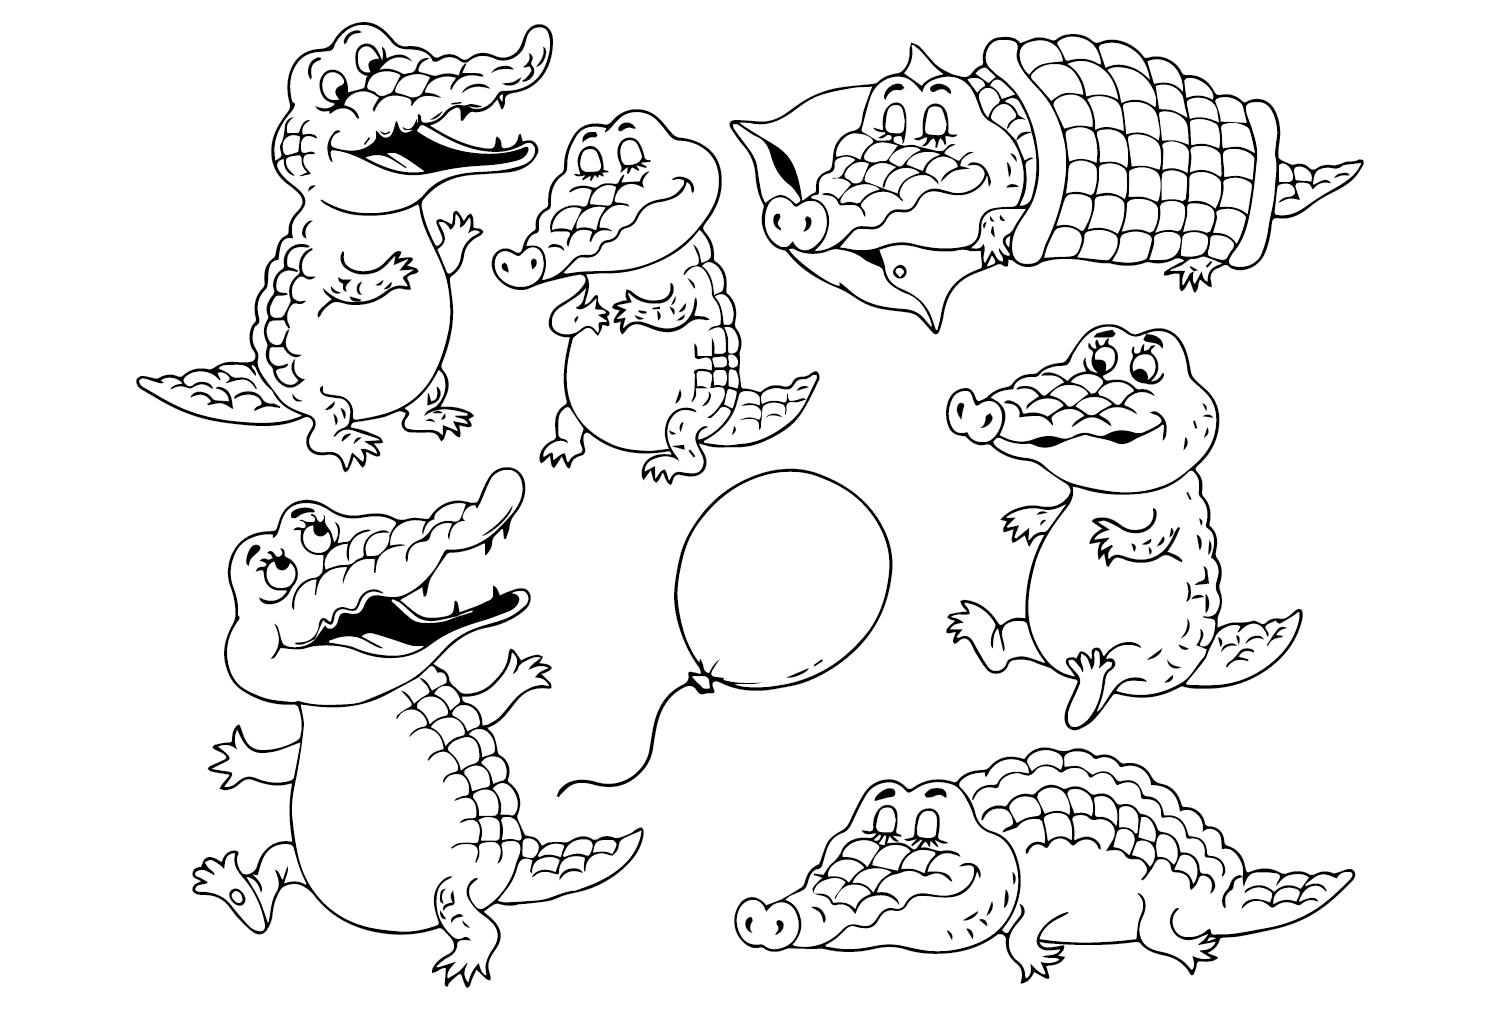 Print de krokodilkleurplaat van Krokodil